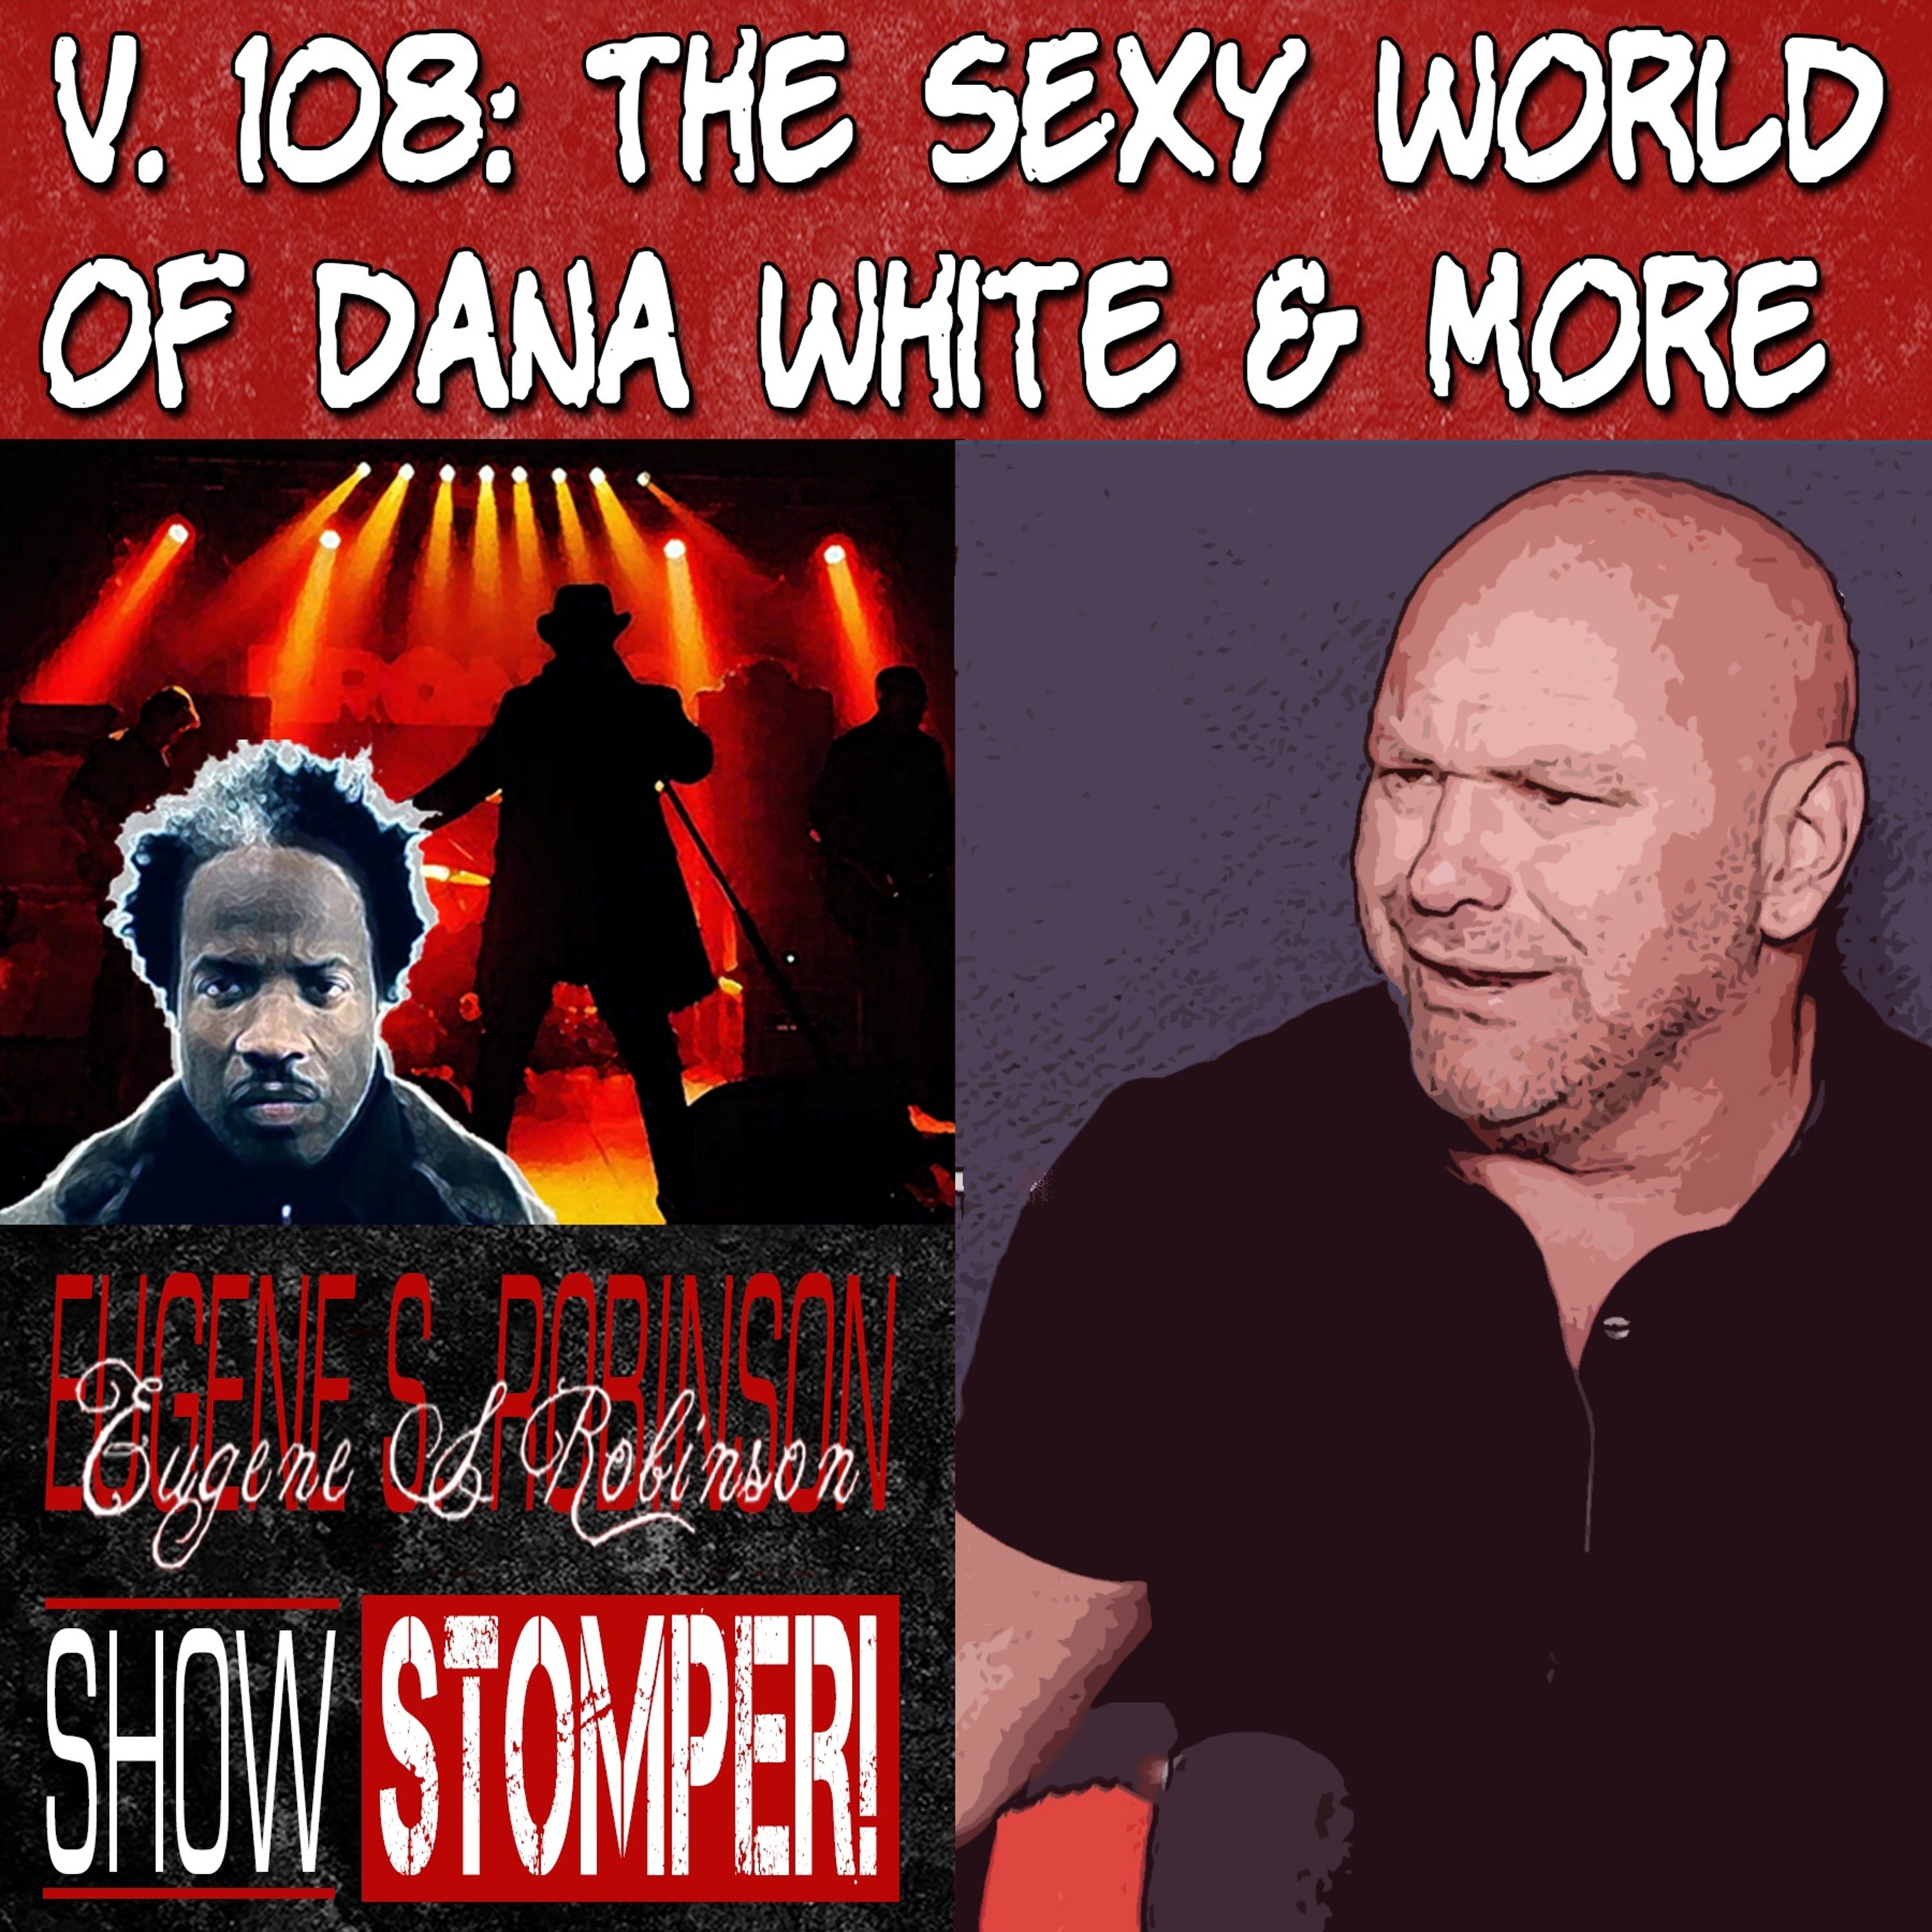 V. 108 The SEXY World Of DANA WHITE + More On The Eugene S. Robinson Show Stomper!